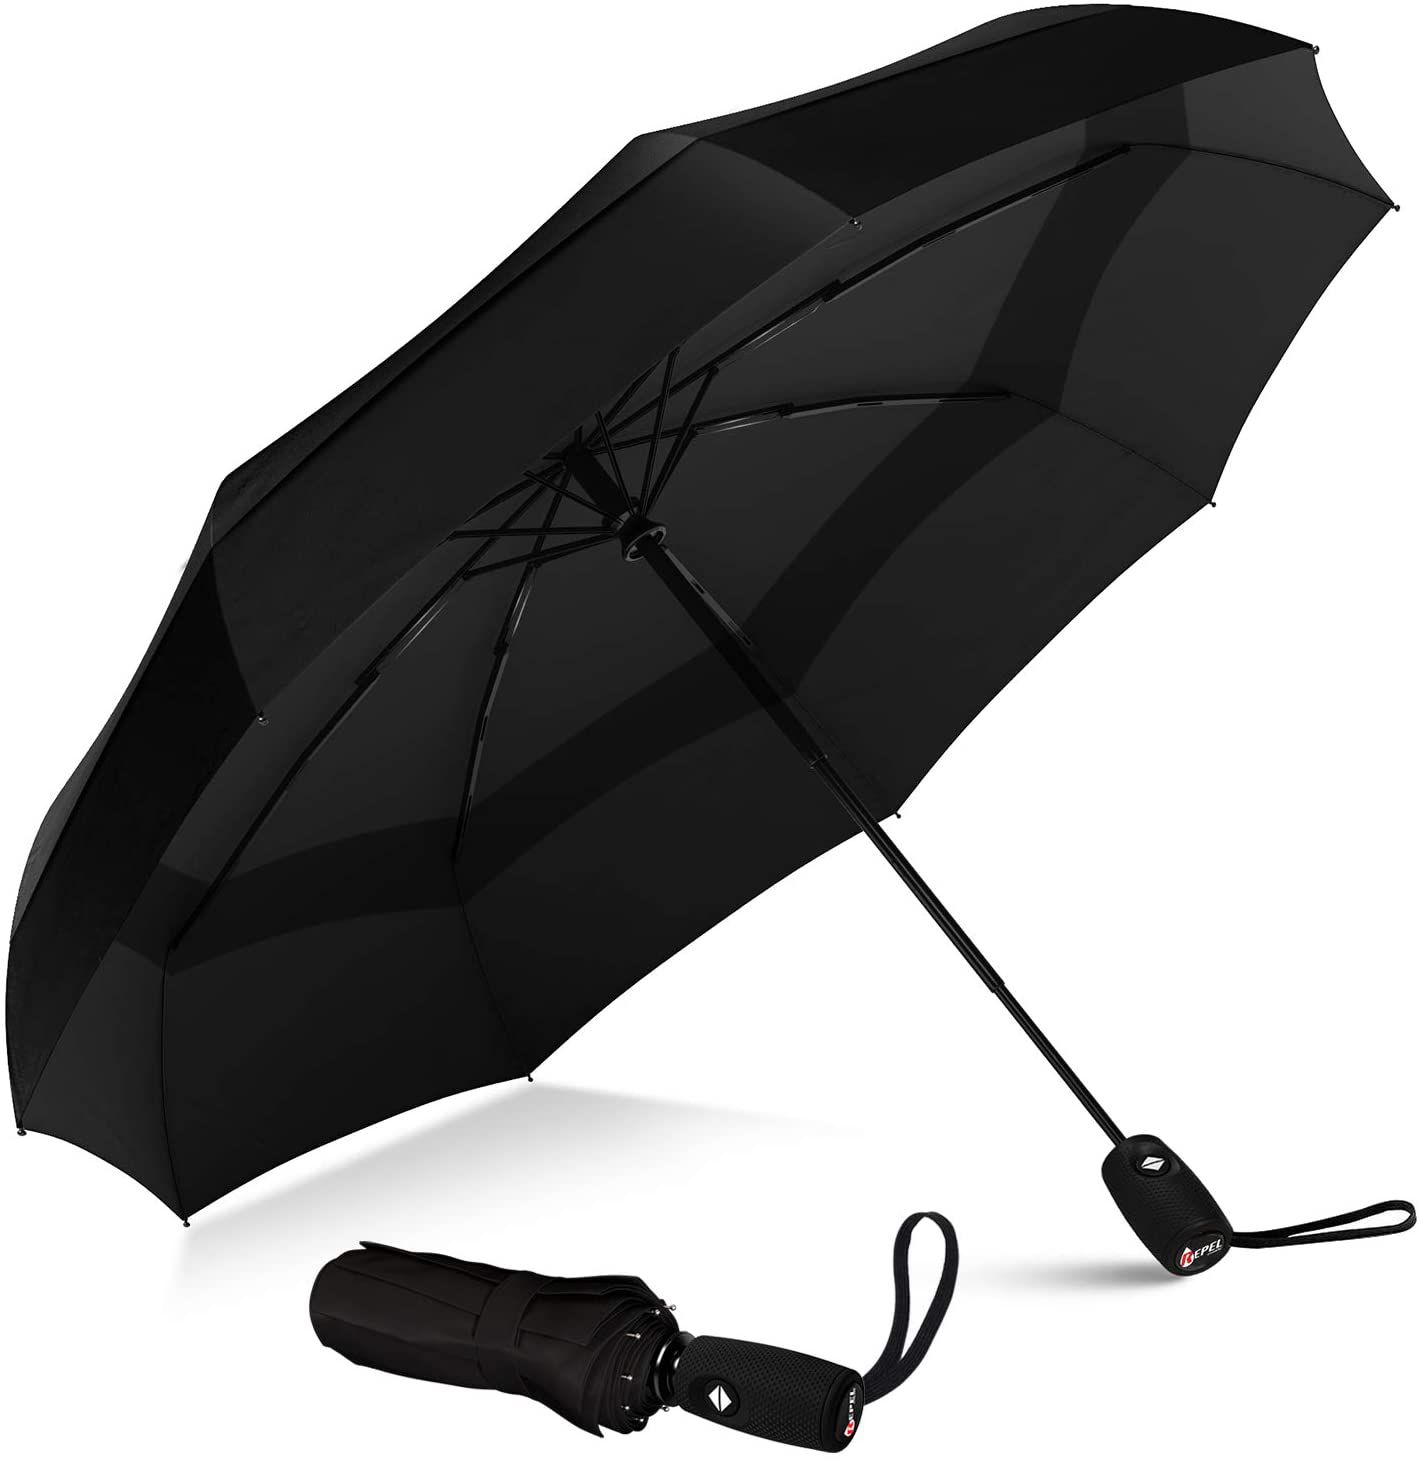 Detail Images Of Umbrellas Nomer 15